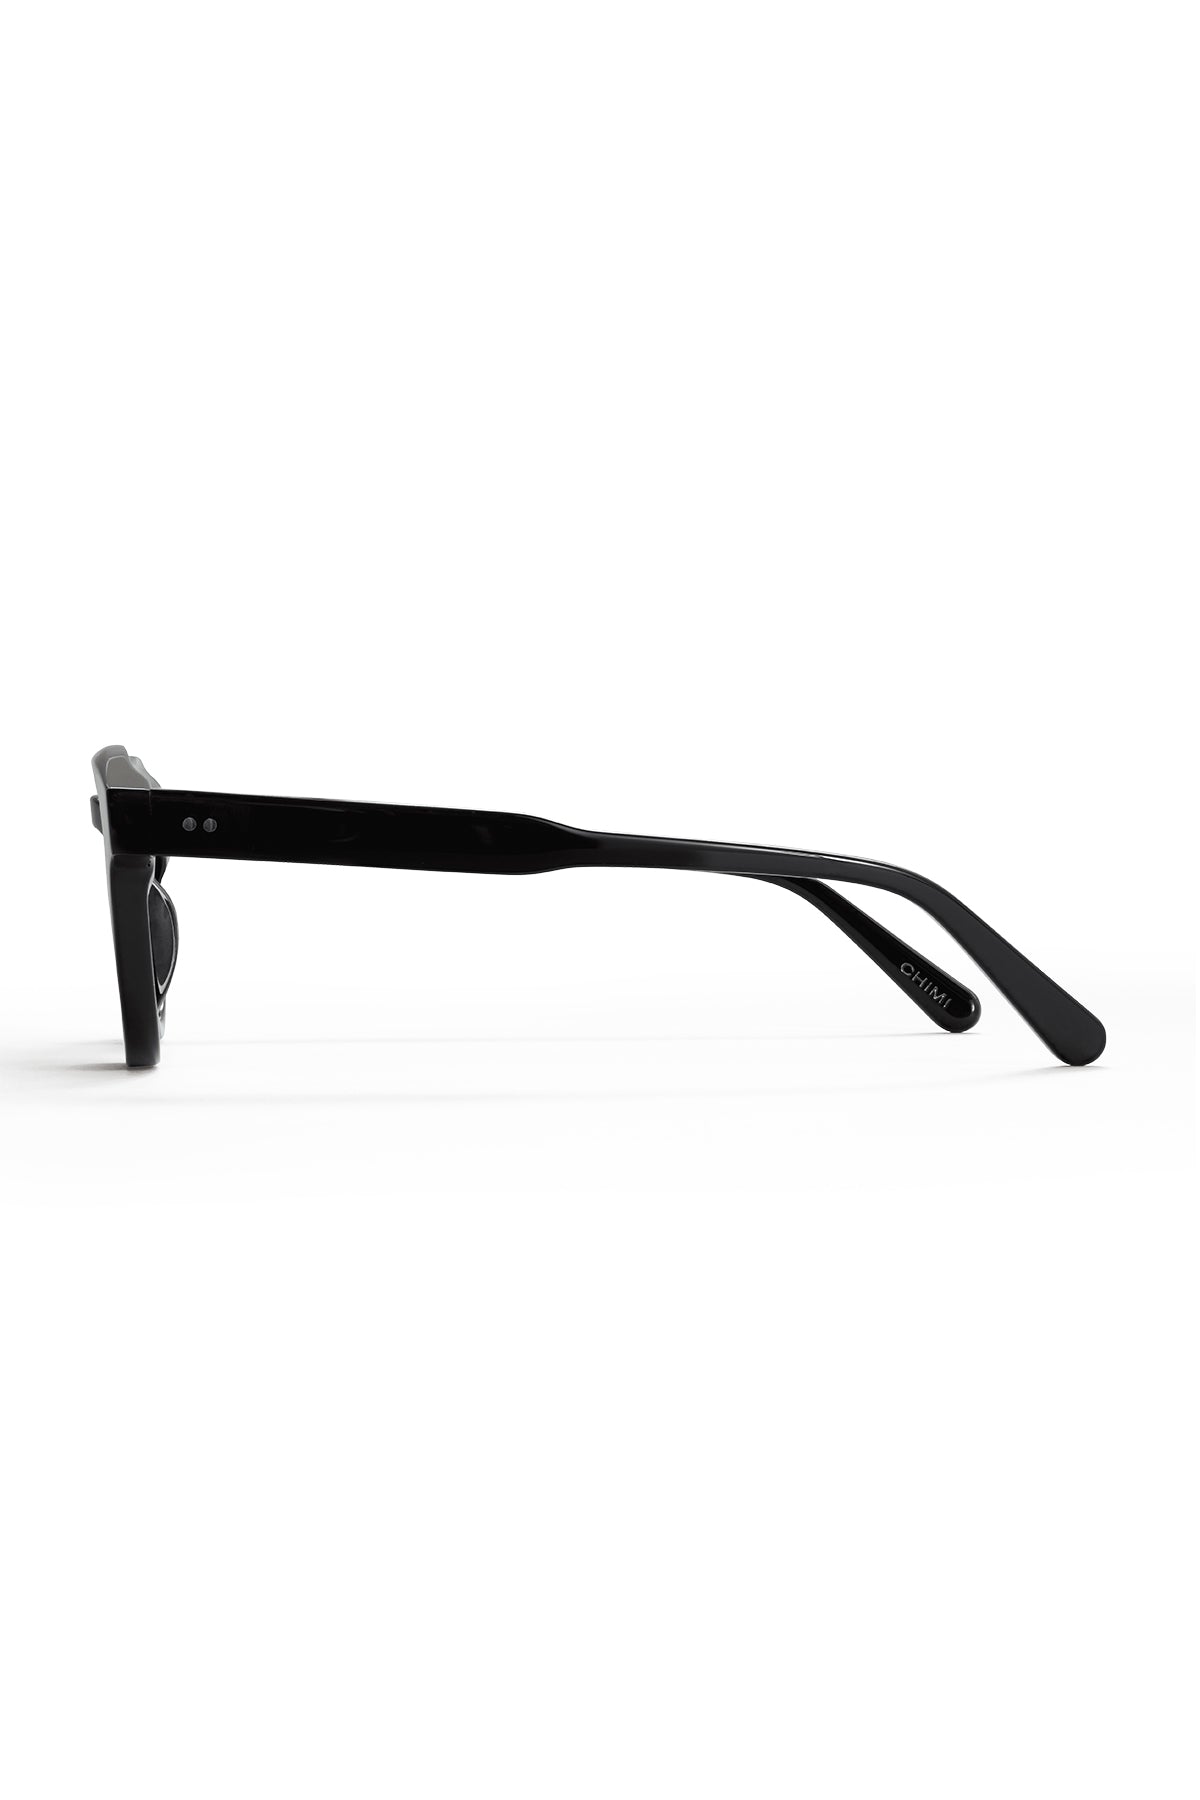 Chimi 01 Sunglasses Black Side-22132559052993